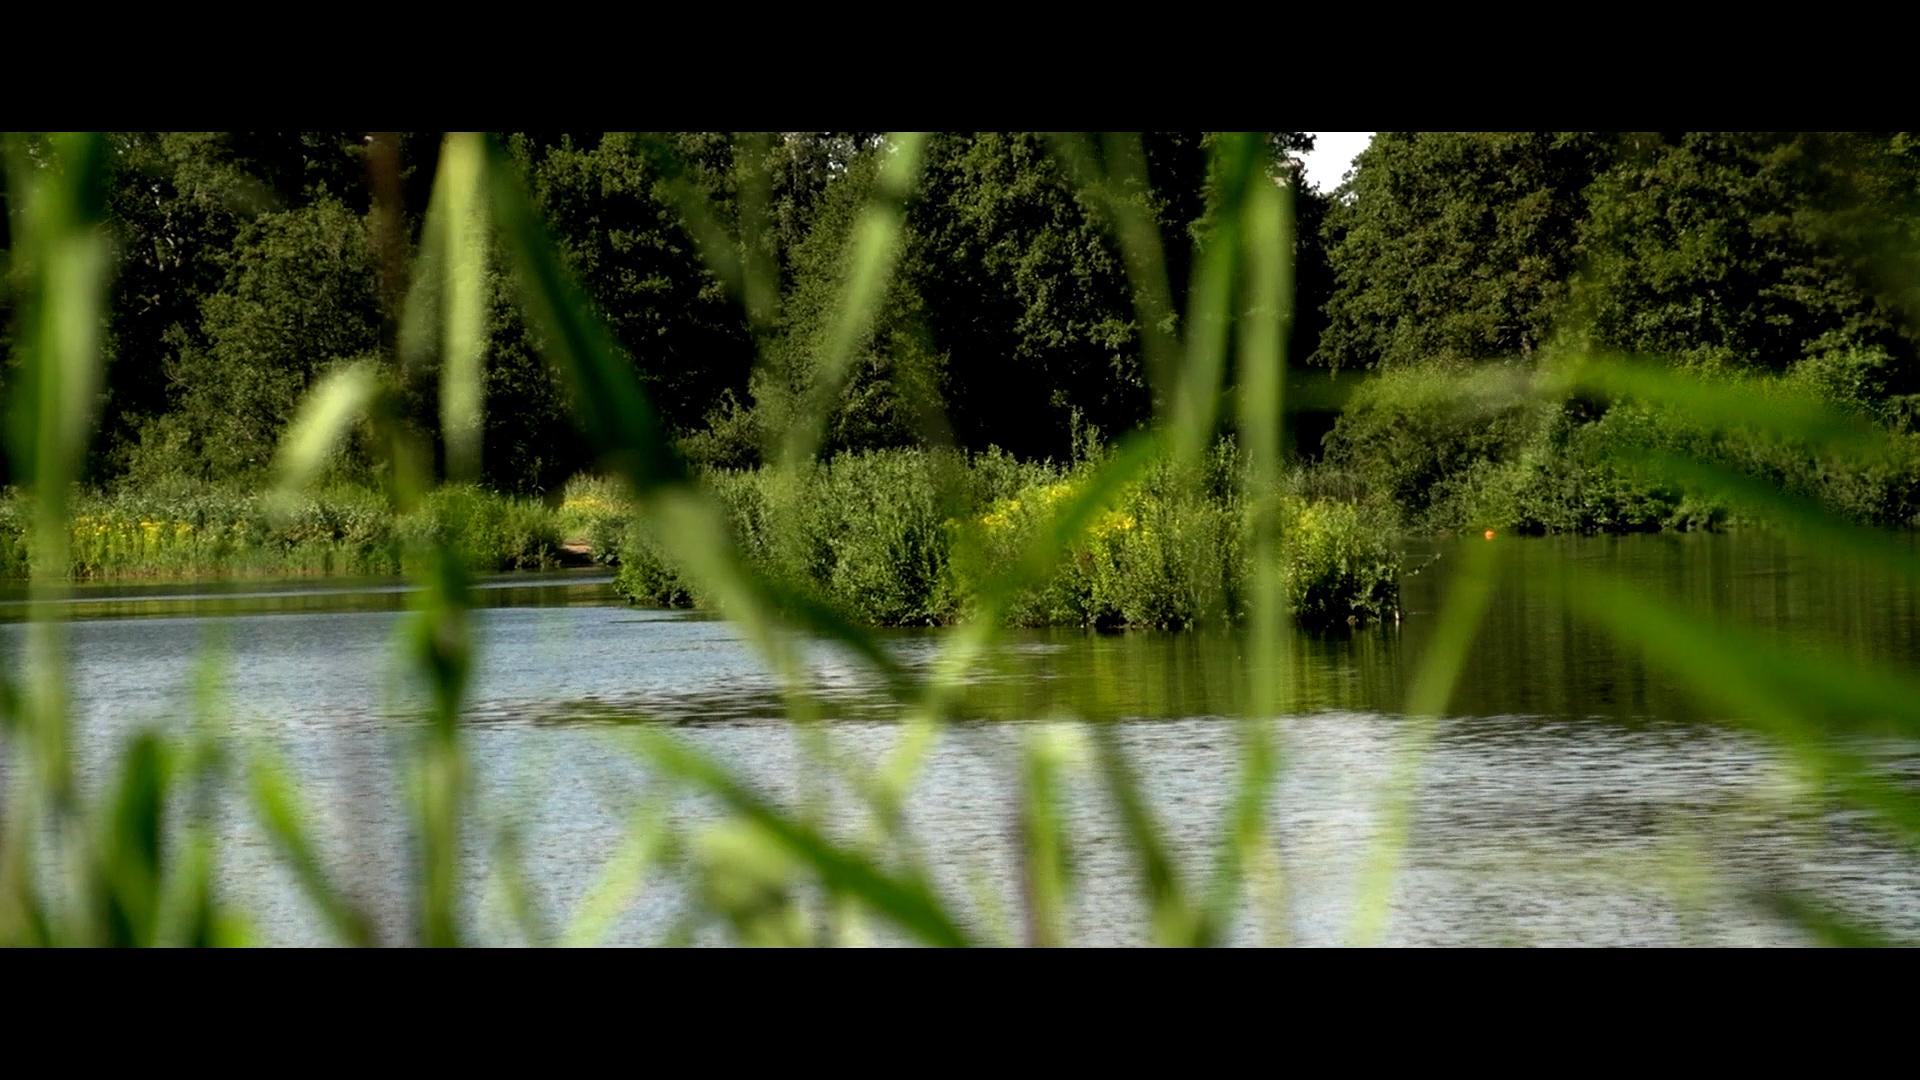 Bildausschnitt aus dem Film "Erinner Dich!" an den Meißendorfer Teichen